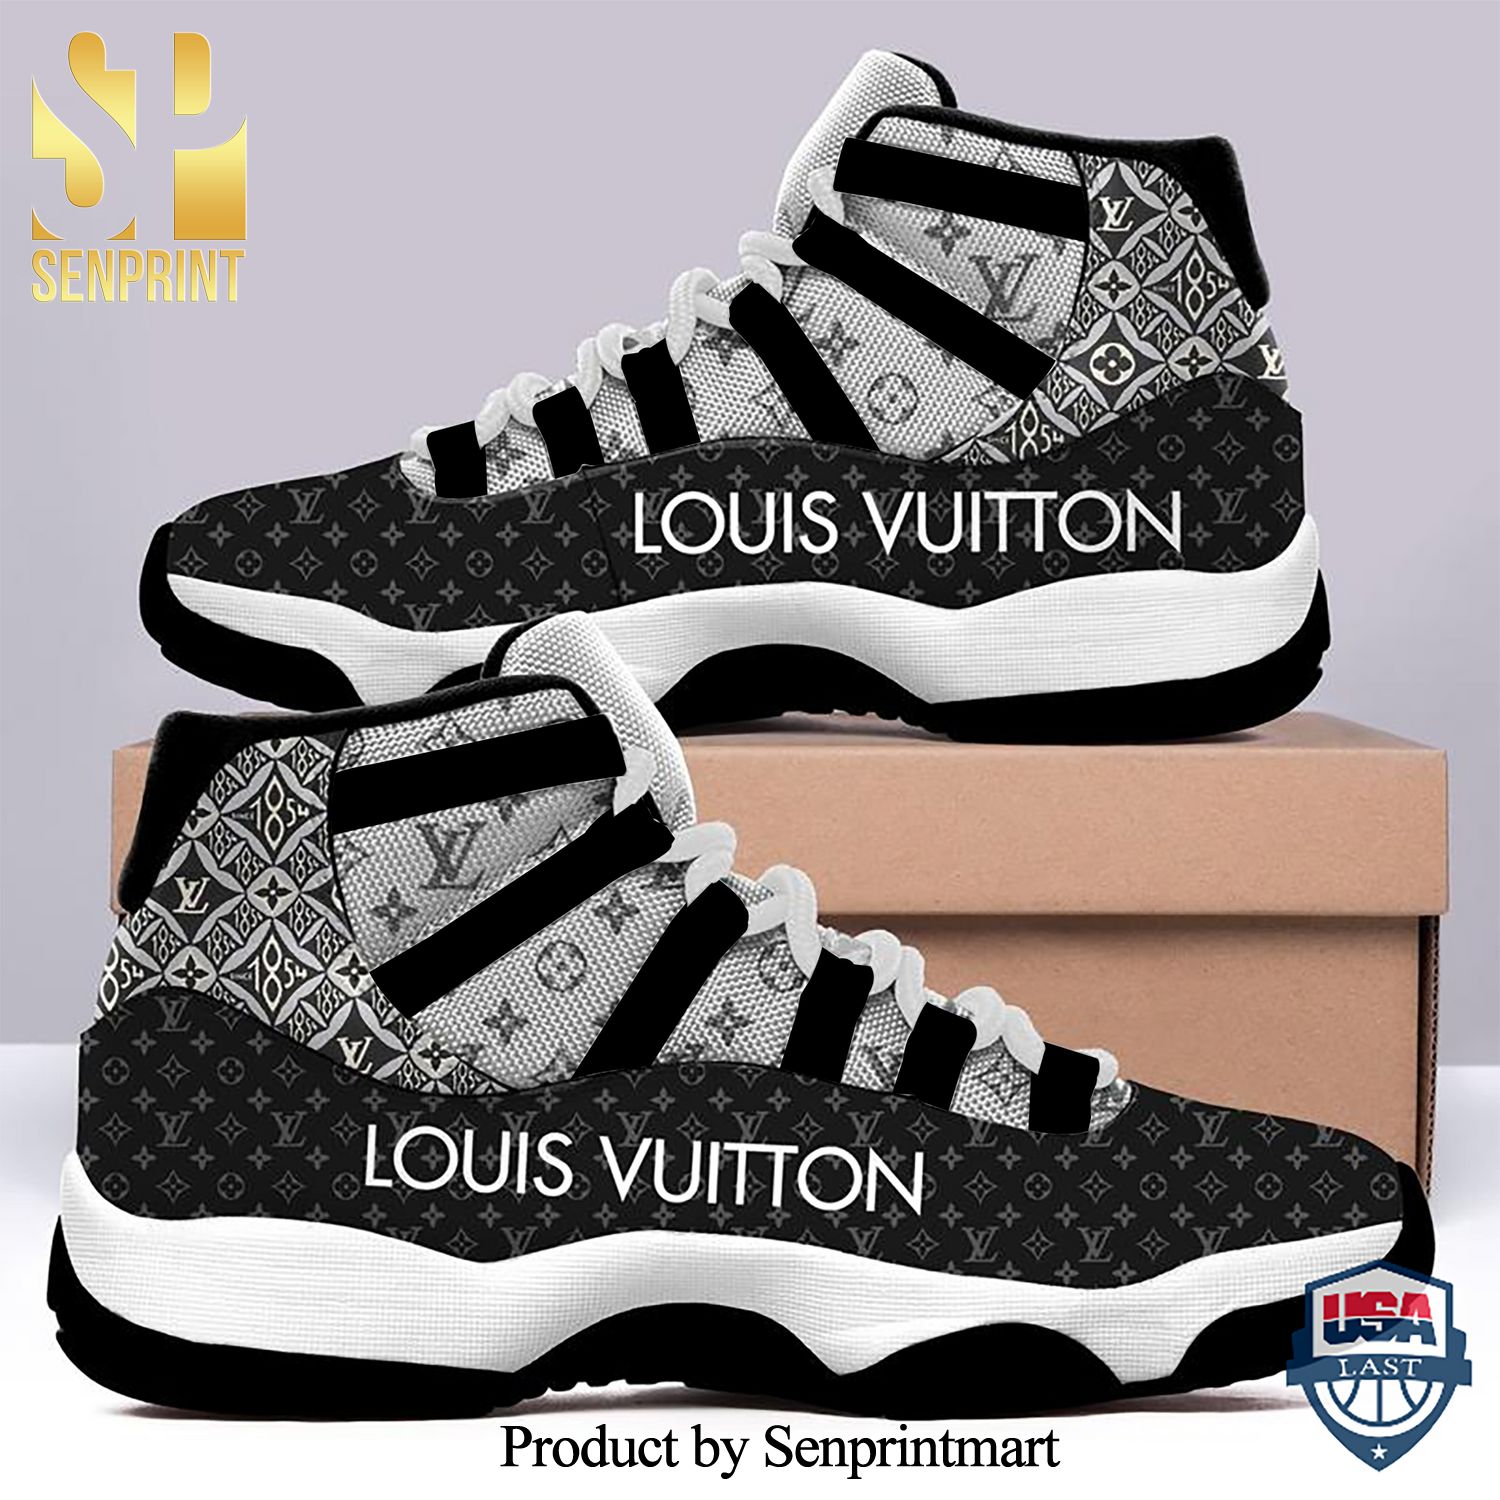 Louis Vuitton Hot Outfit Air Jordan 11